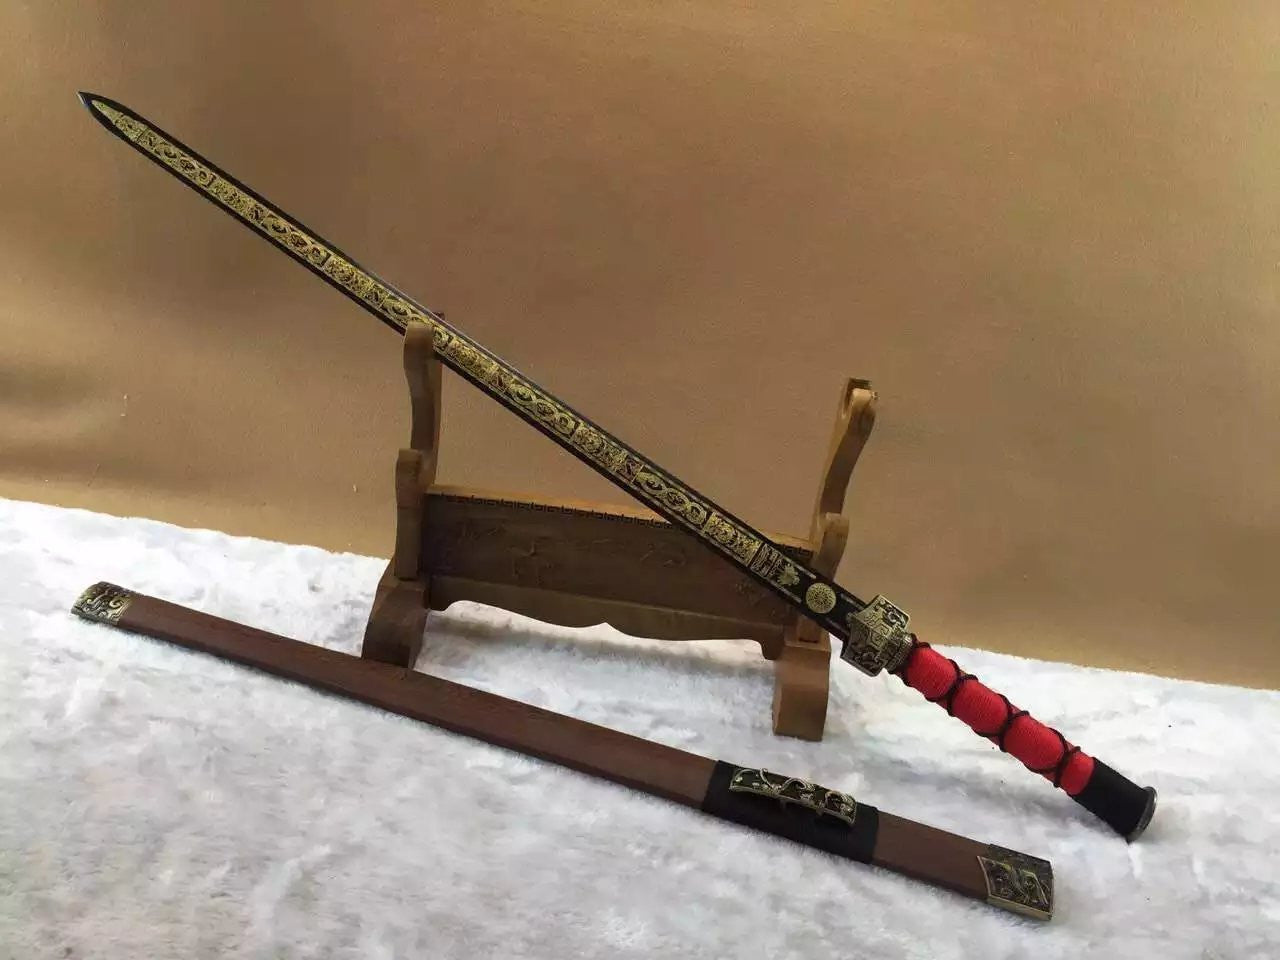 Han jian/Medium carbon steel etching pattern blade/Alloy/Length 41" - Chinese sword shop